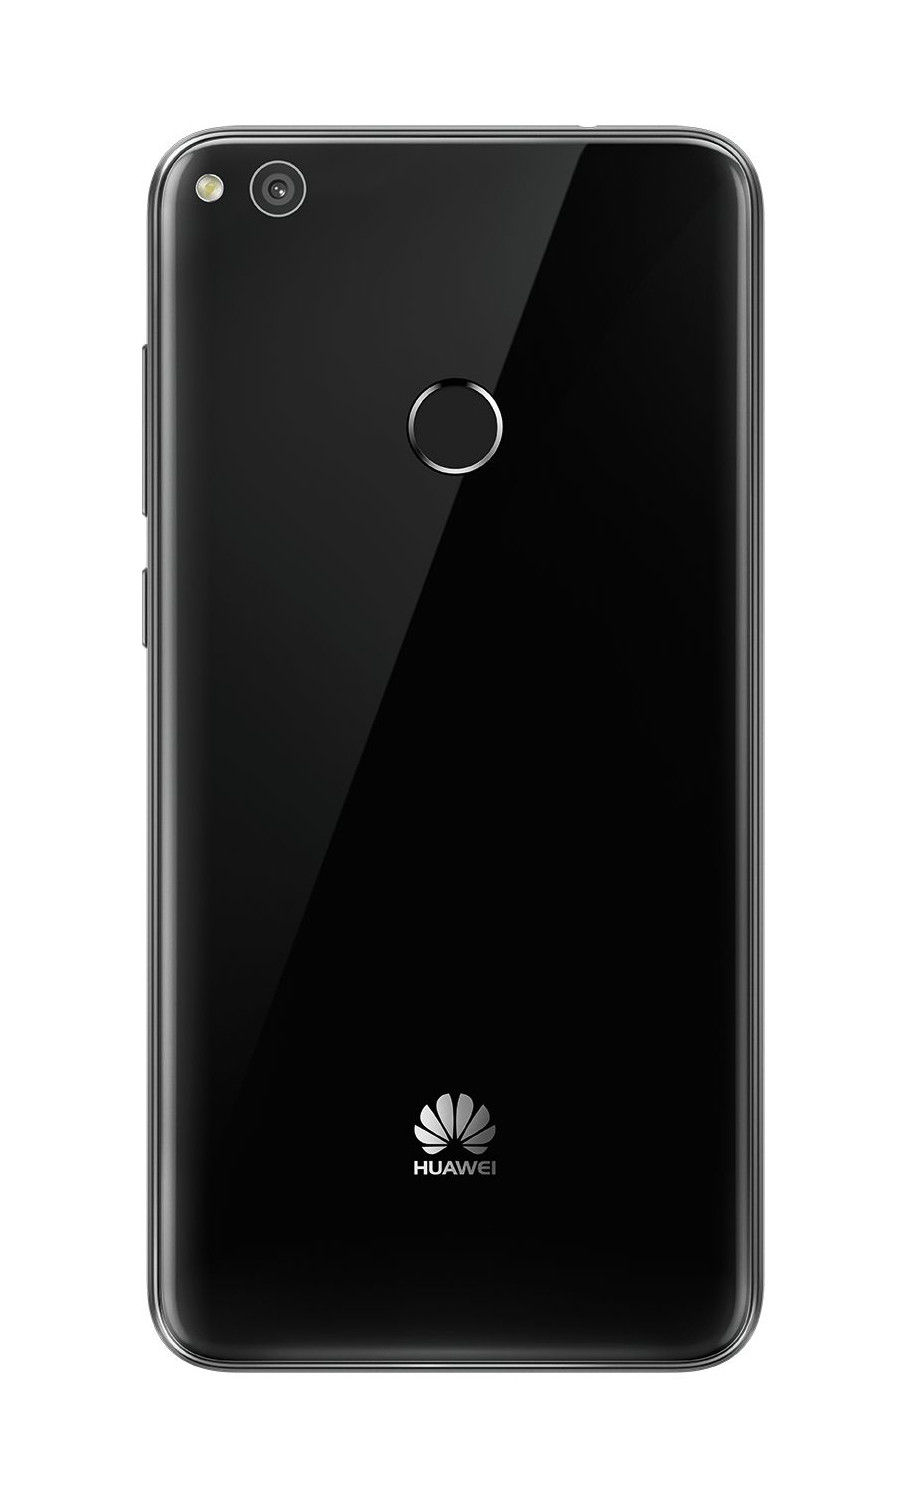 Huawei P8 Lite újratöltve!